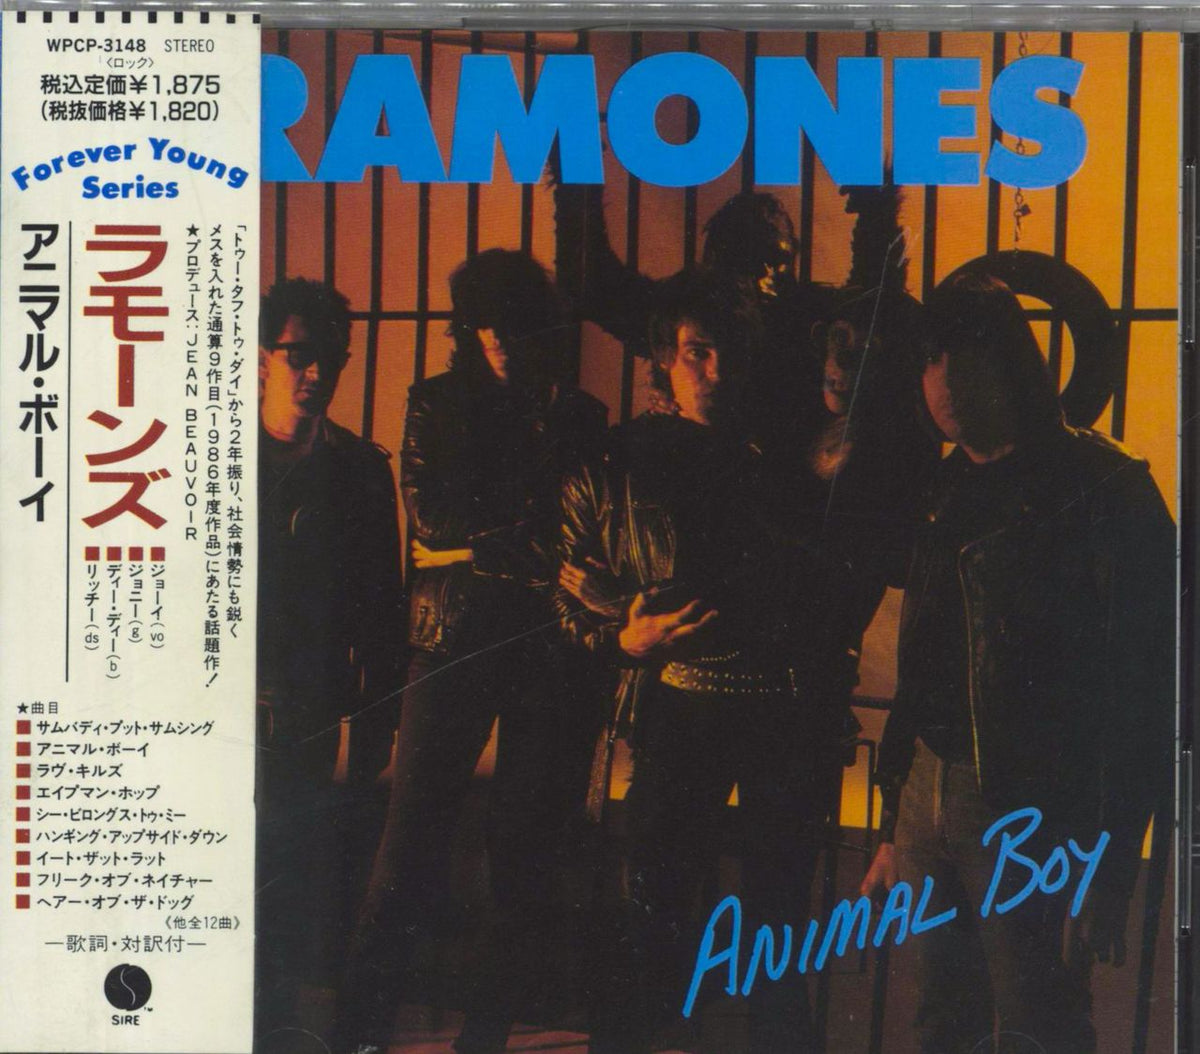 The Ramones Animal Boy - 1st Japanese CD album — RareVinyl.com